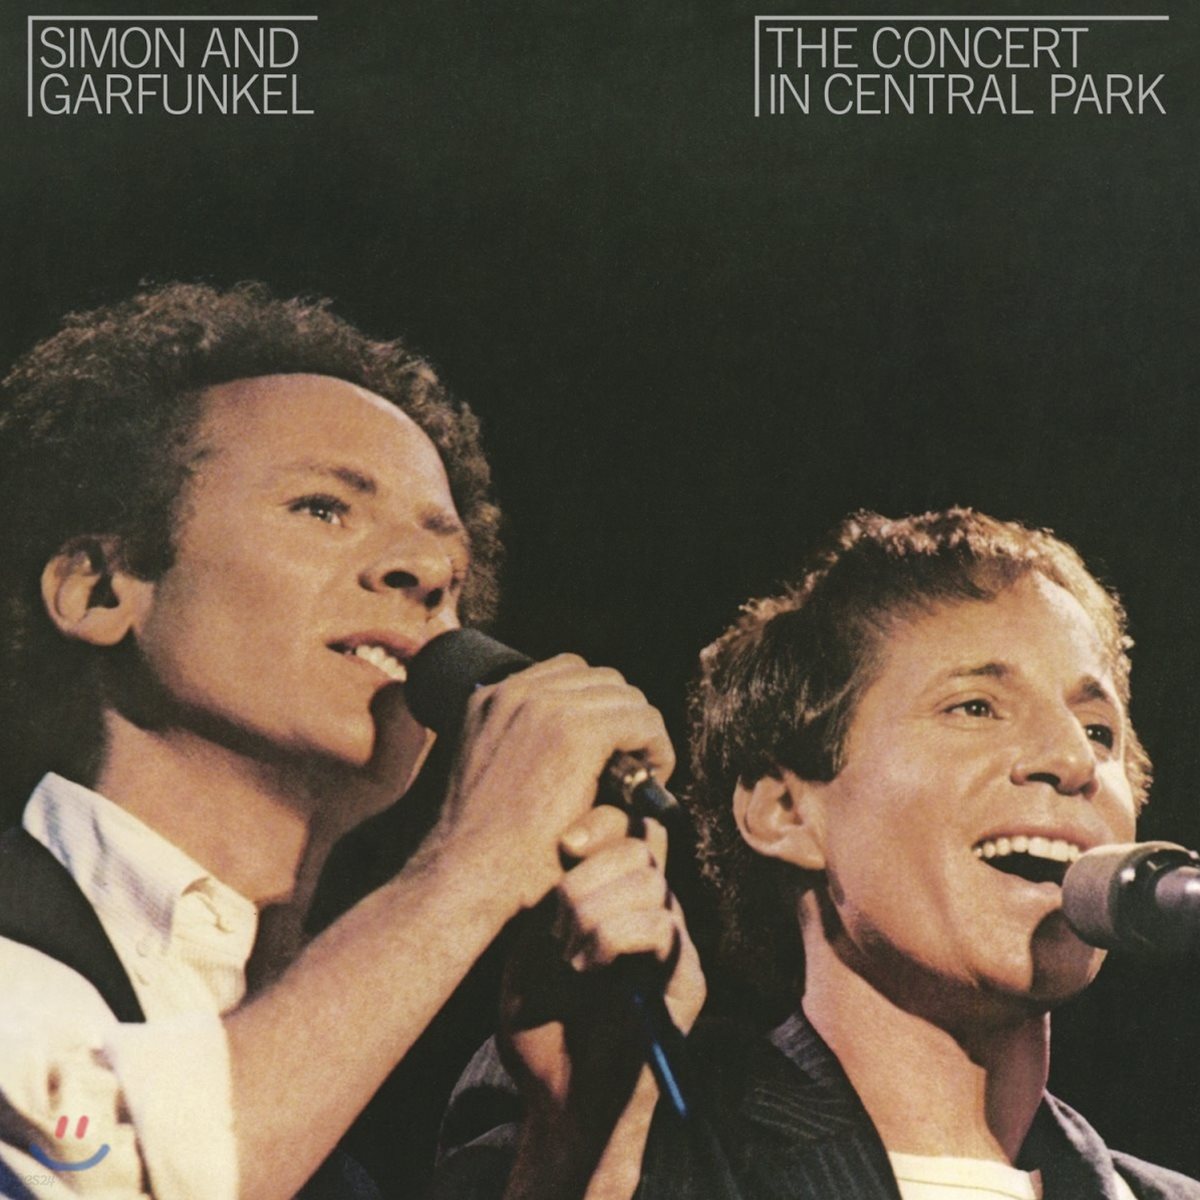 Simon &amp; Garfunkel - The Concert In Central Park 사이먼 앤 가펑클 라이브 앨범 [2LP]